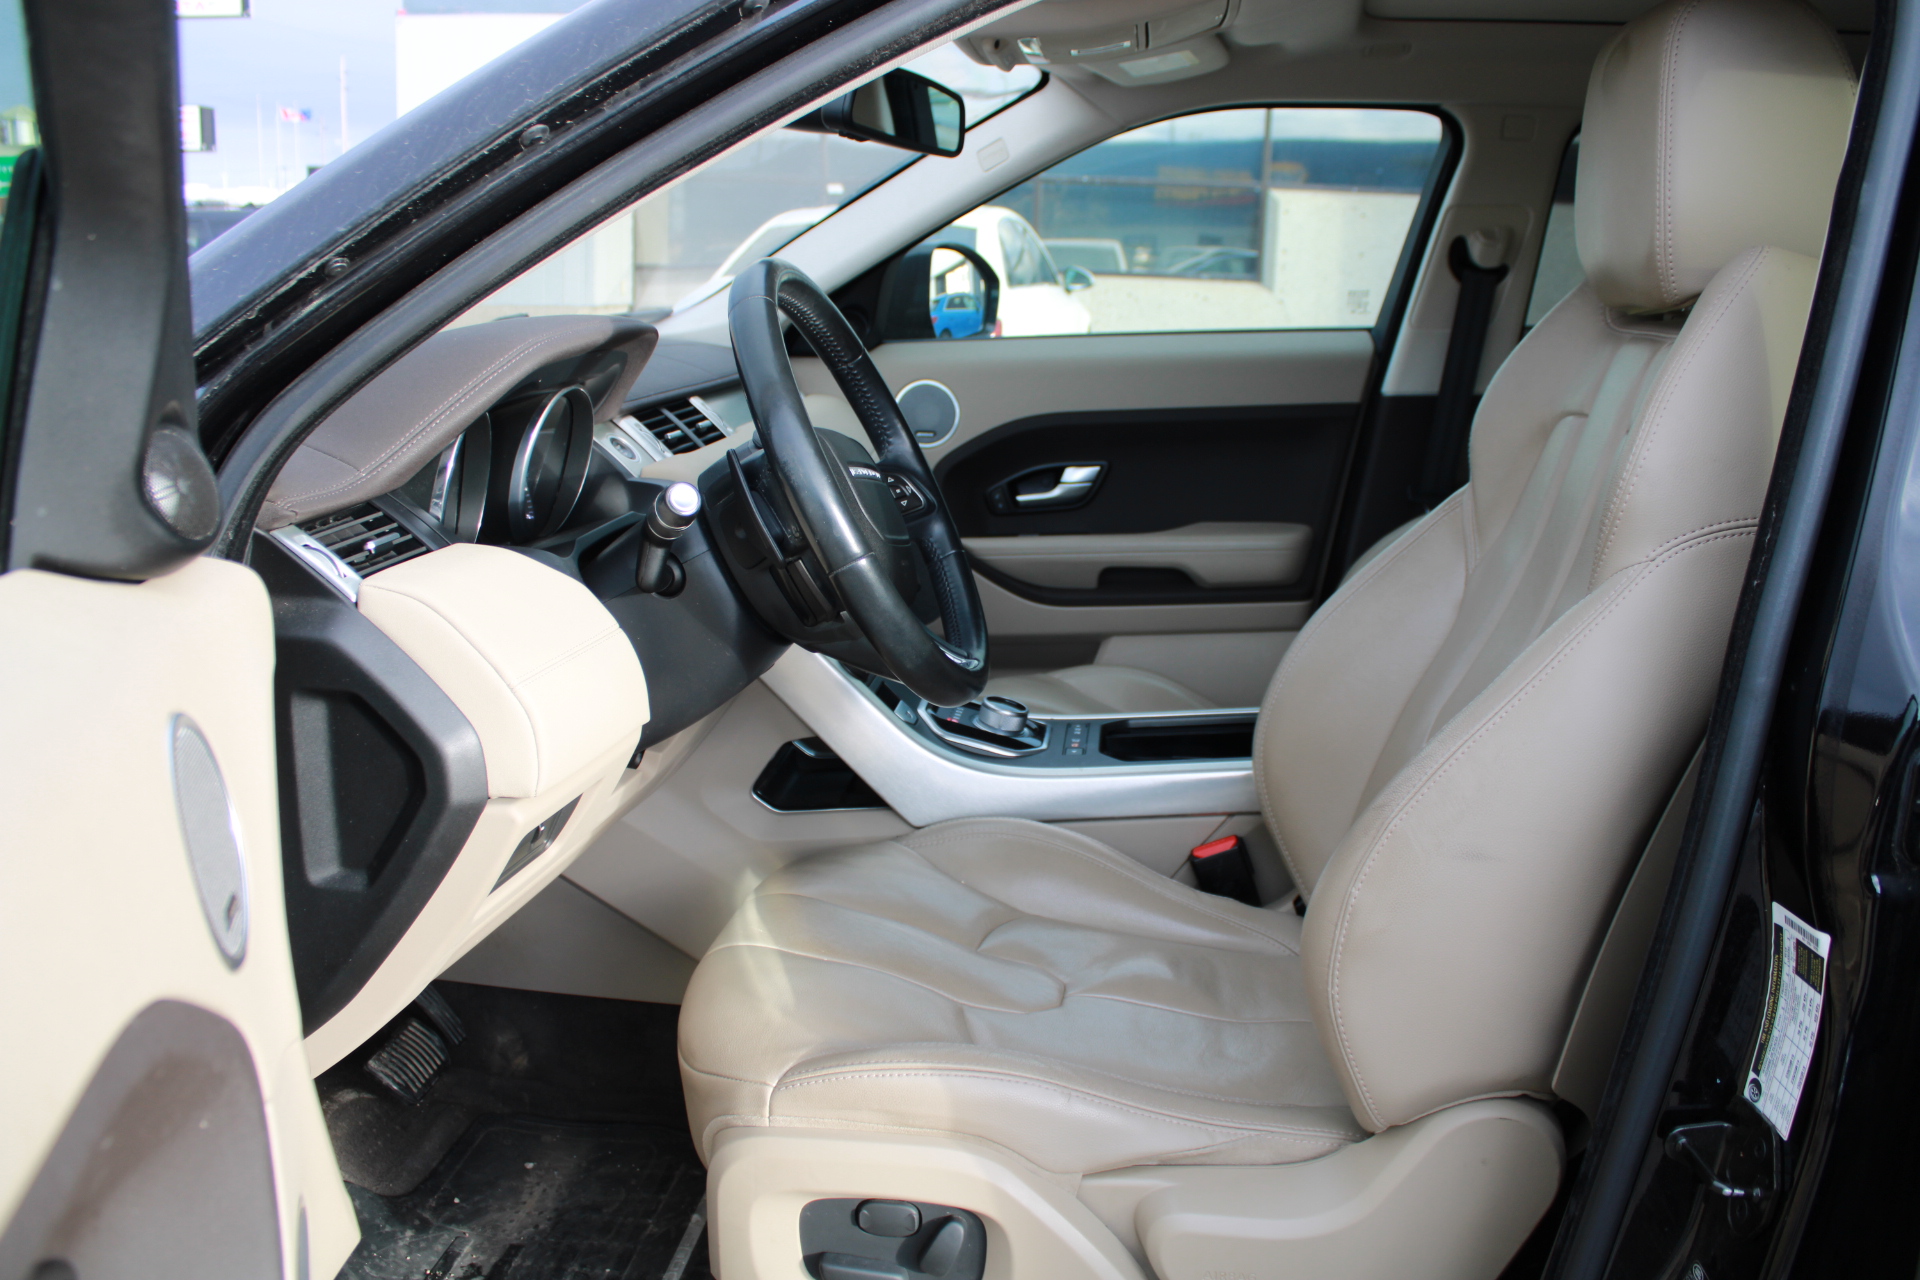 Preowned 2015 Land Rover Range Rover Evoque Pure Plus in Calgary Alberta